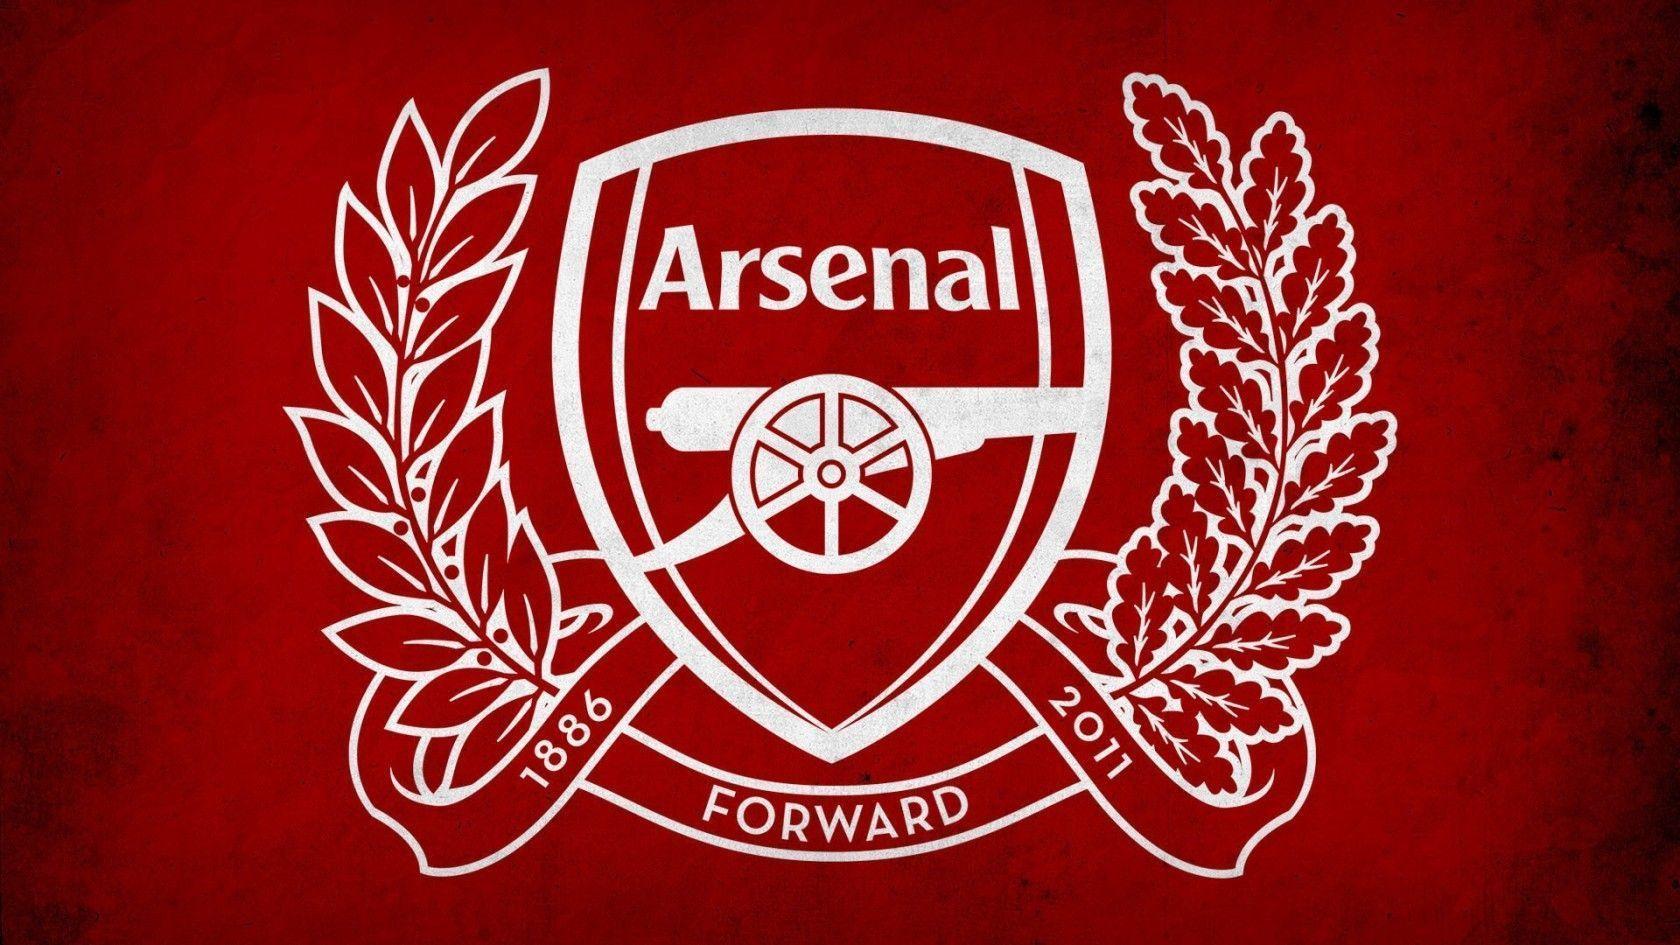 Asenal HD Wallpaper. Download Arsenal Picture